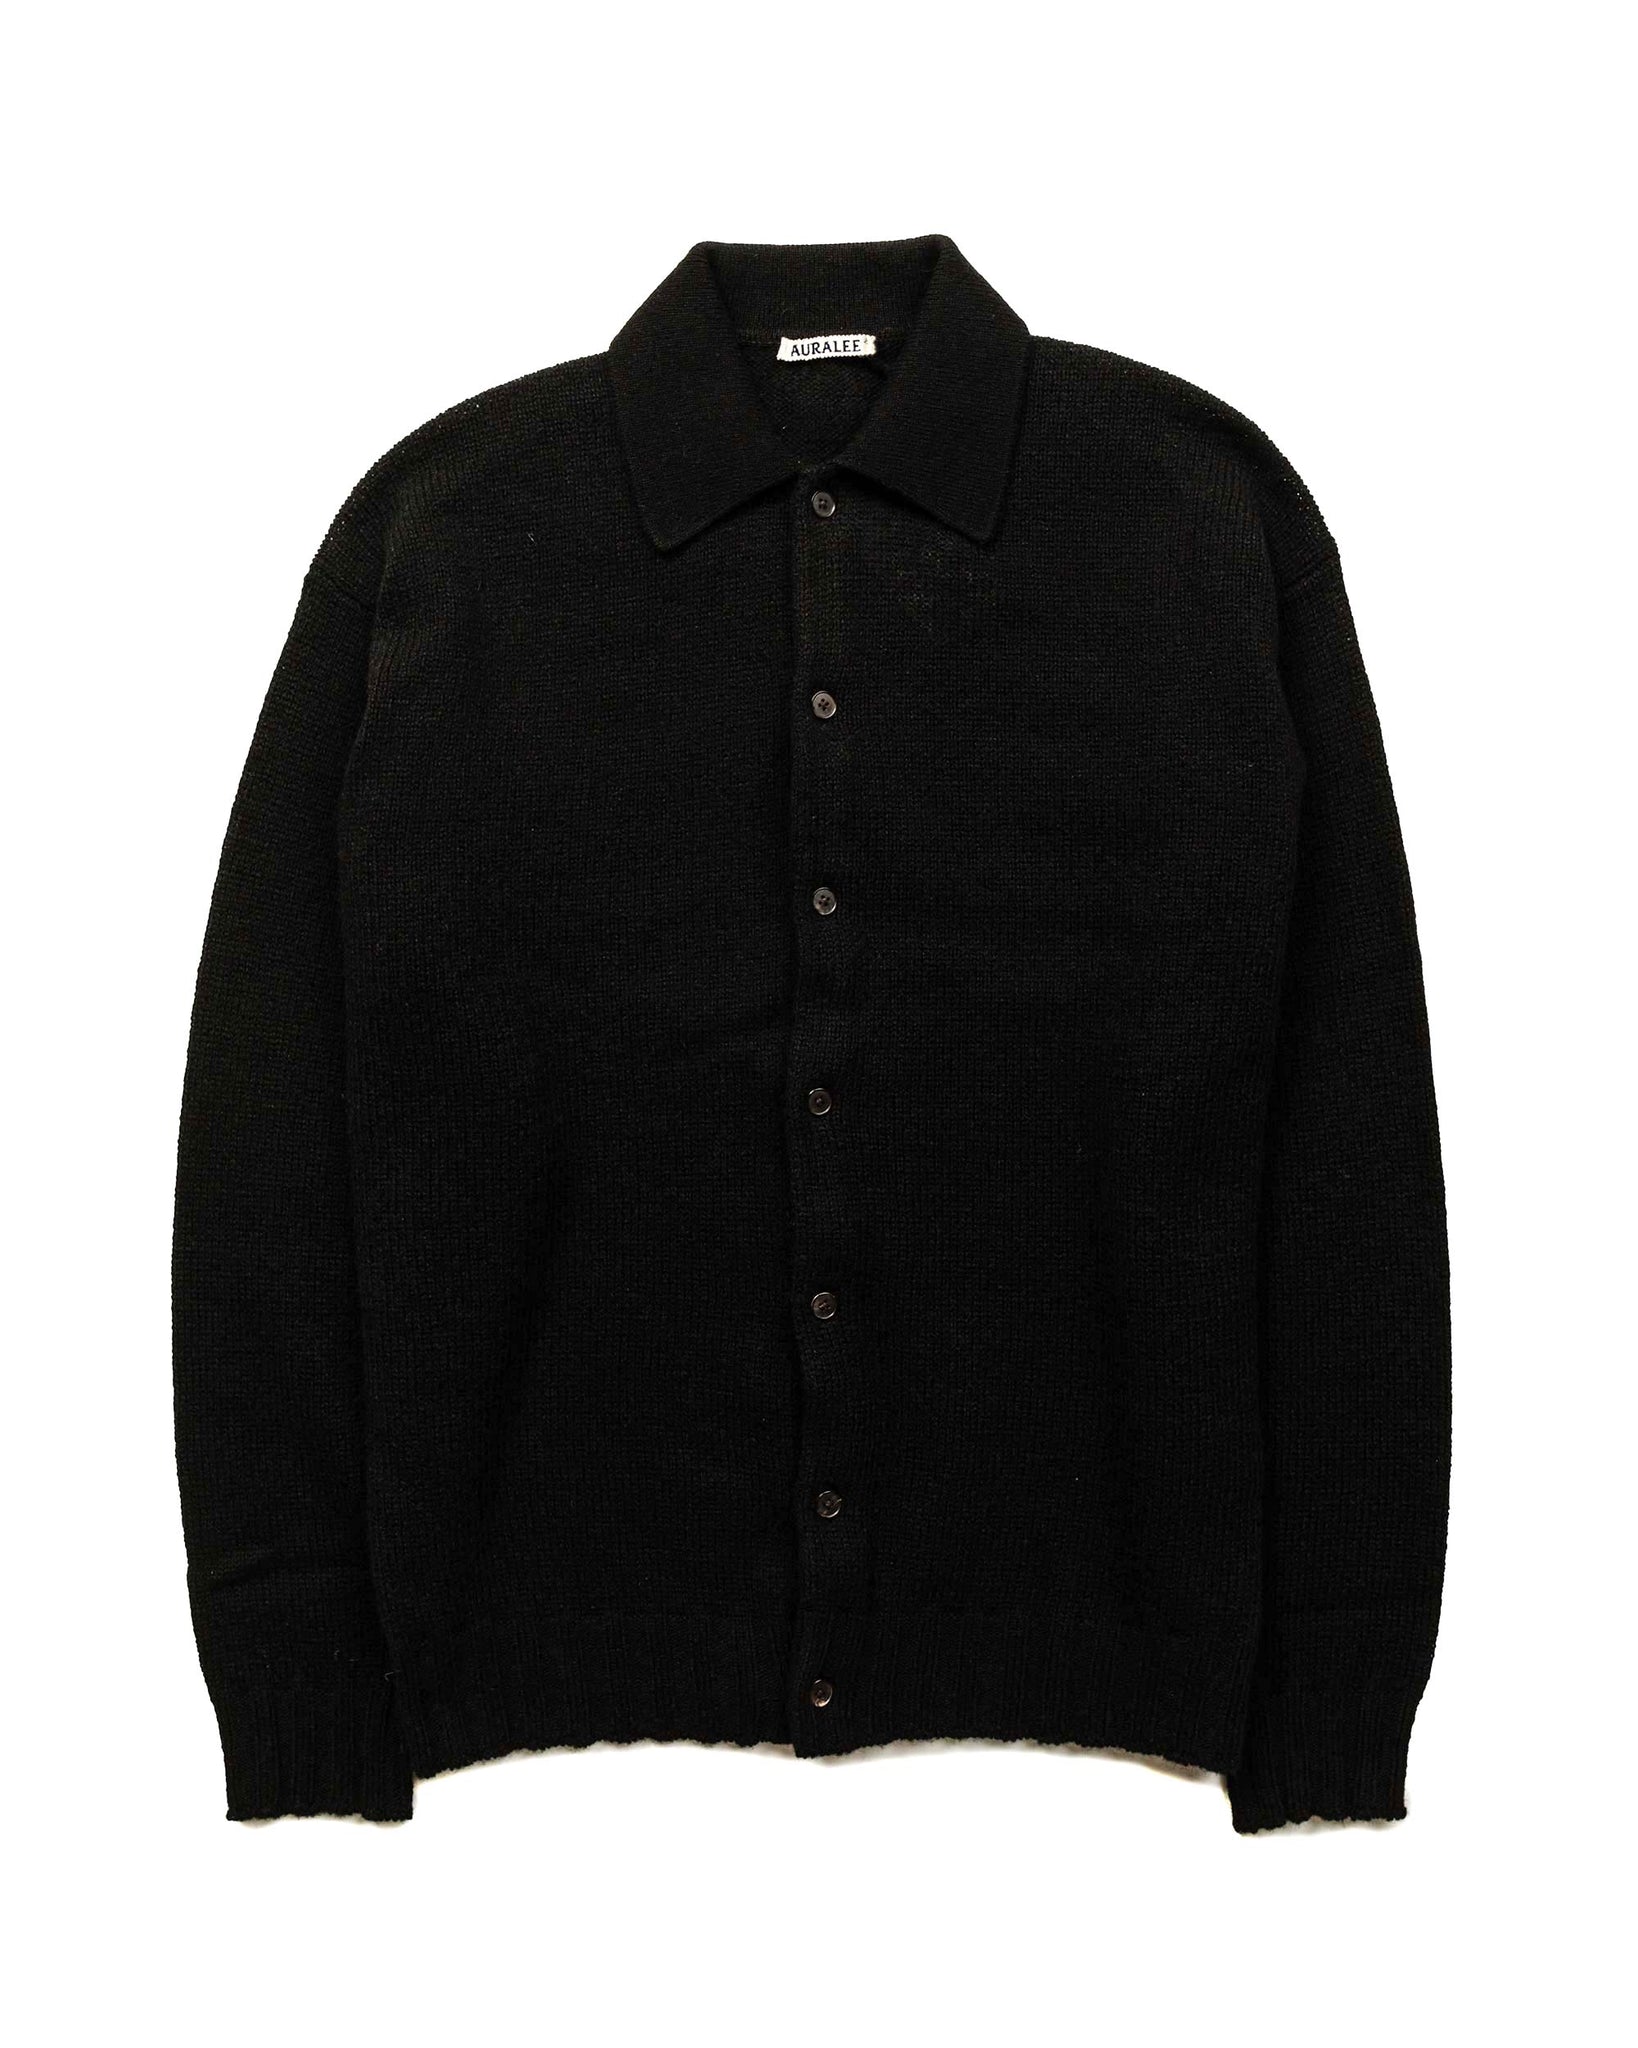 Auralee Shetland Wool Cashmere Knit Cardigan Black